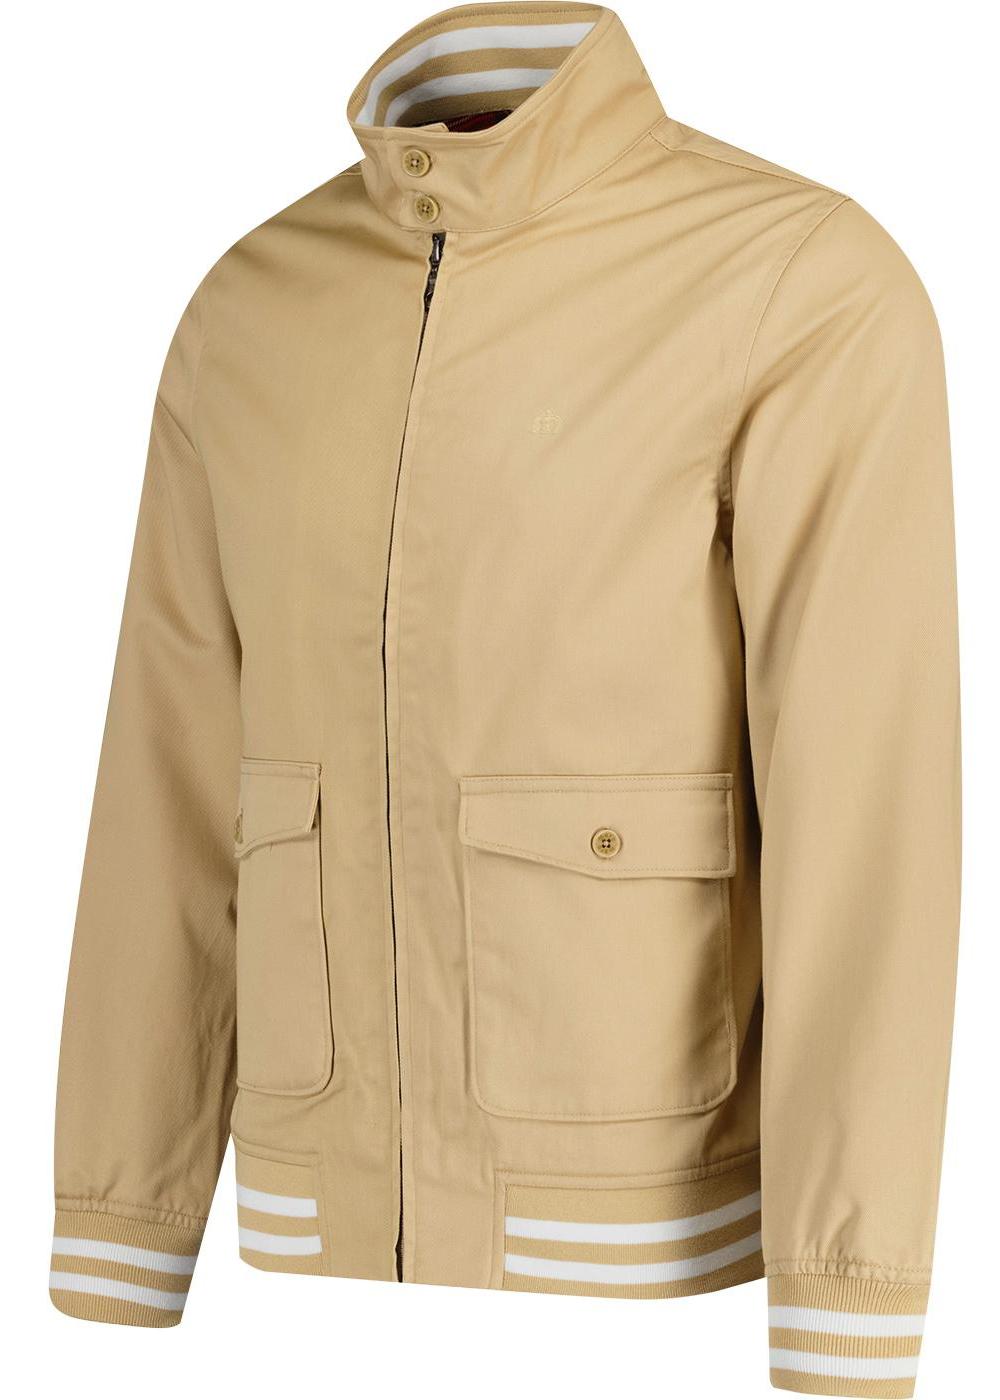 Куртка Merc Харрингтон (Harrington) Dunston, расцветка tan (желтовато-коричневый)